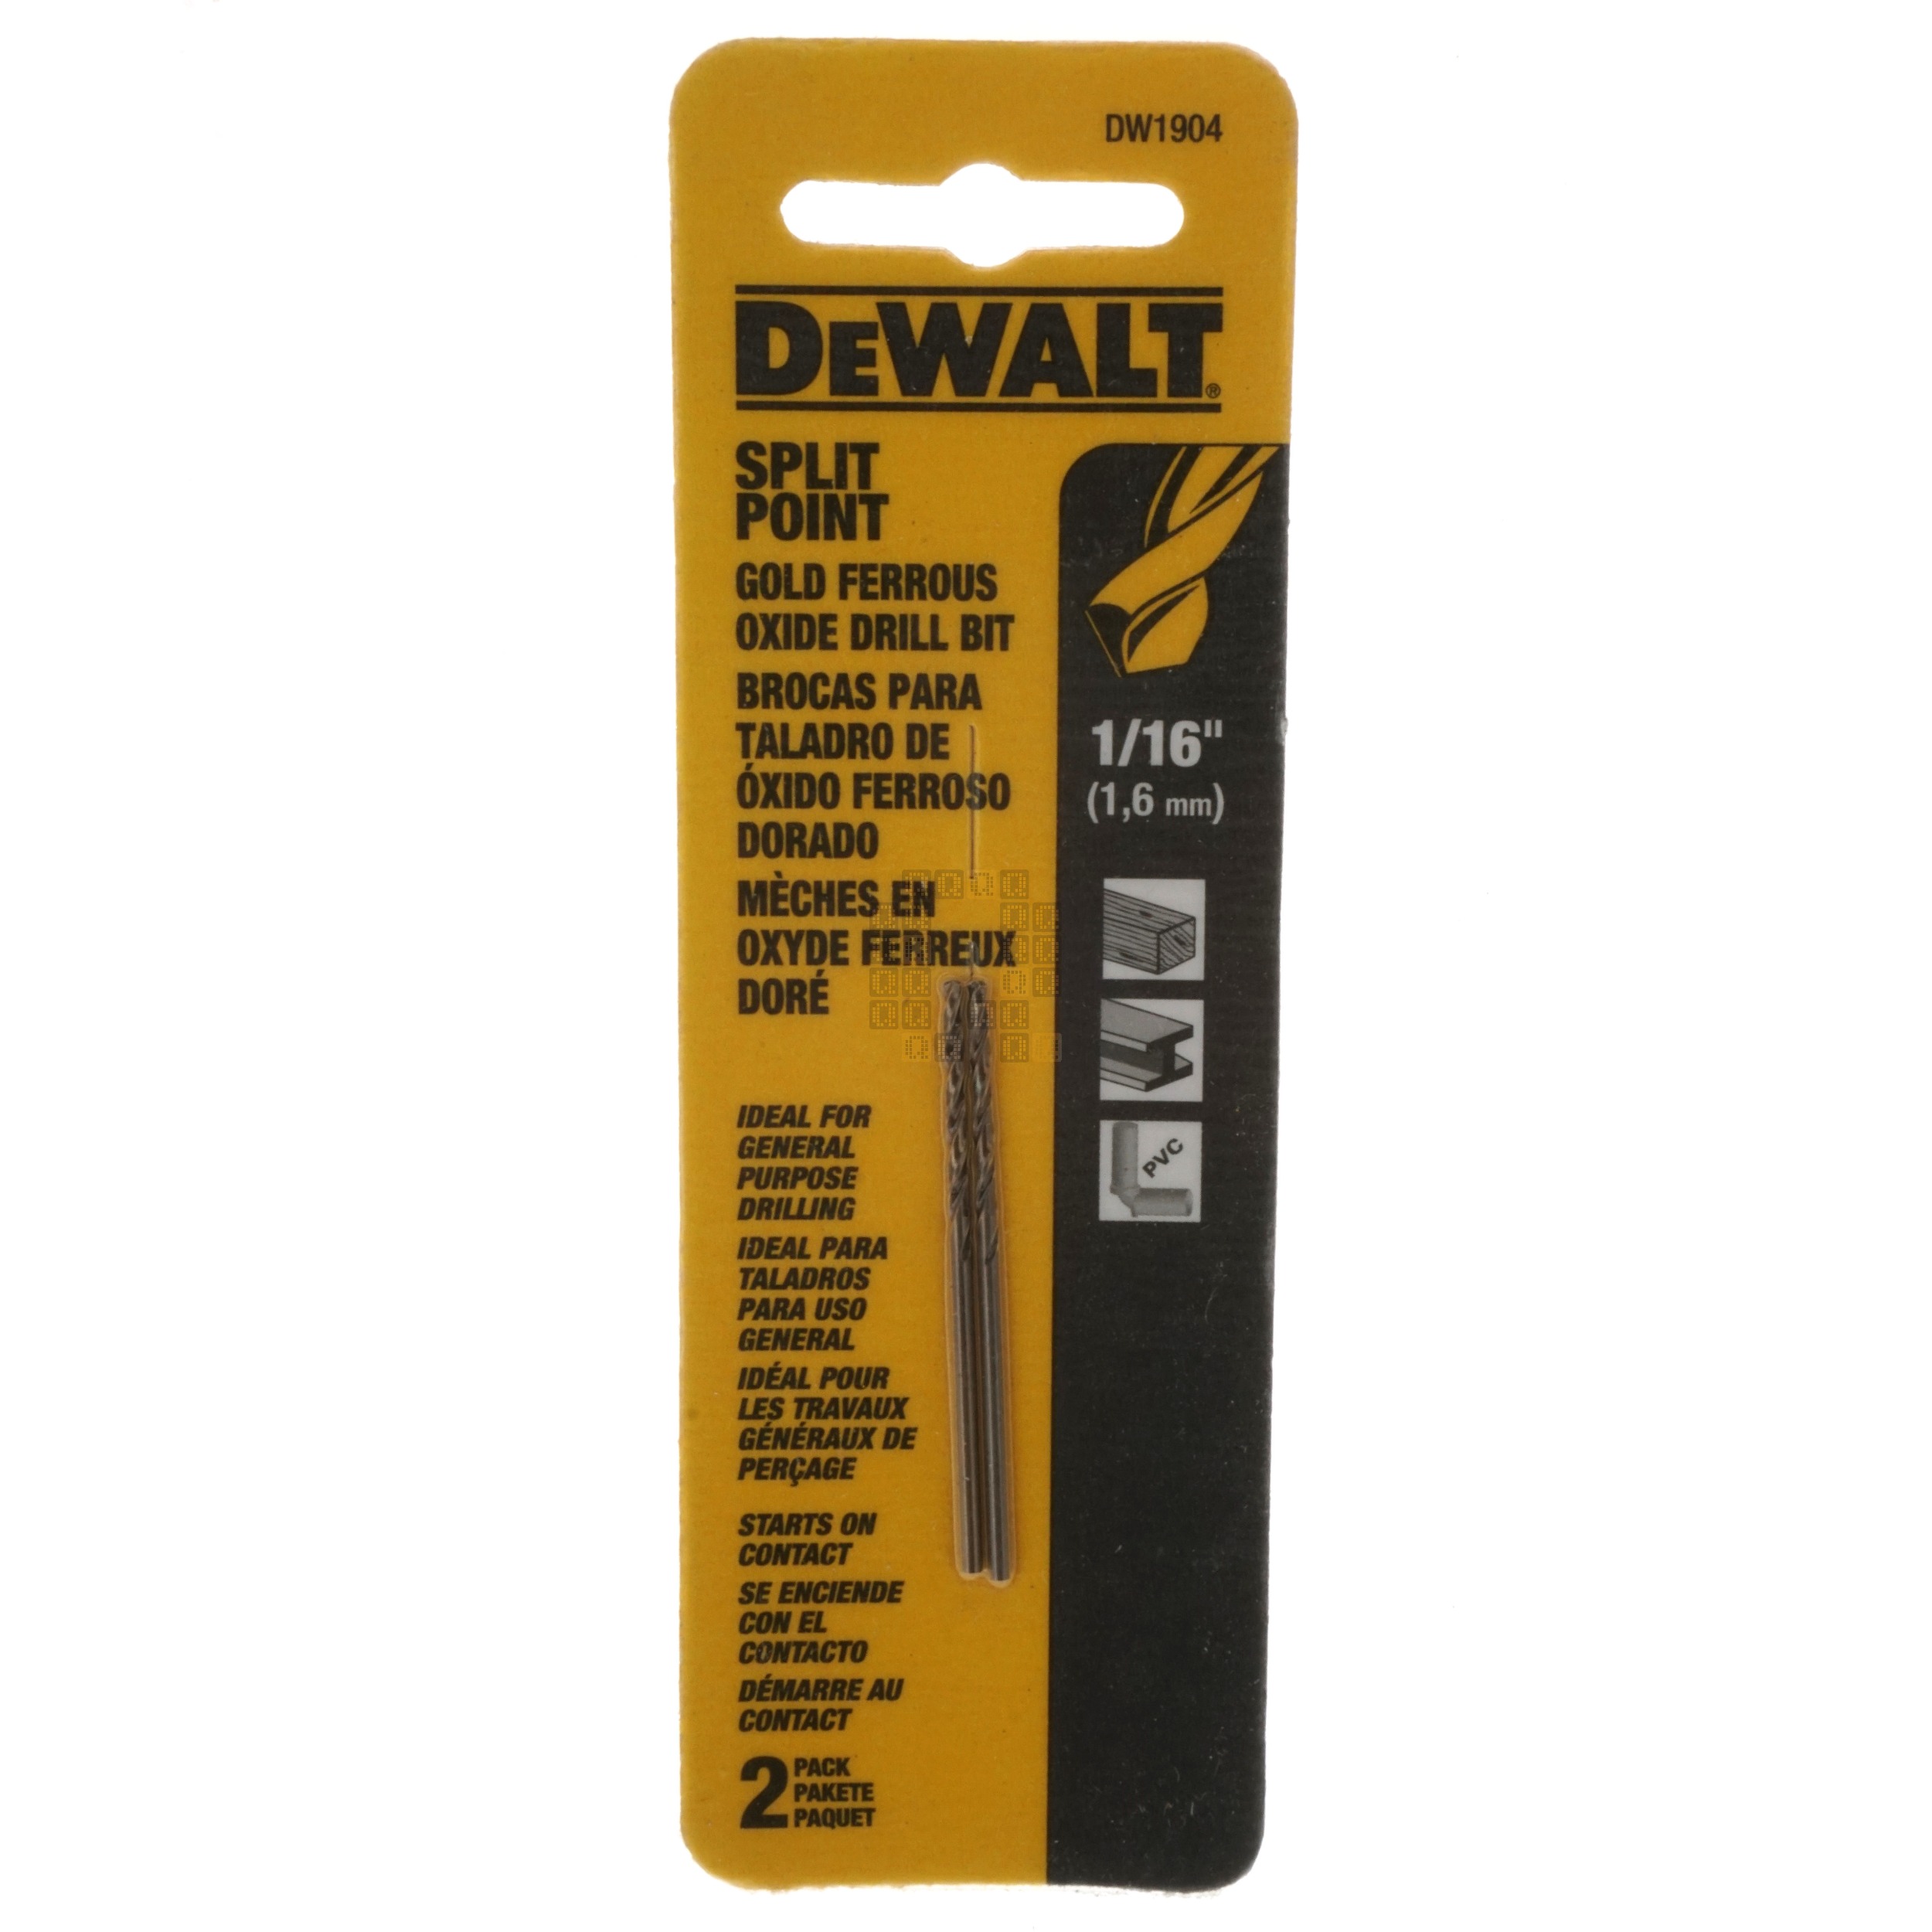 DeWALT DW1904 1/16" Split Point Gold Ferrous Oxide Drill Bit, 2-Pack